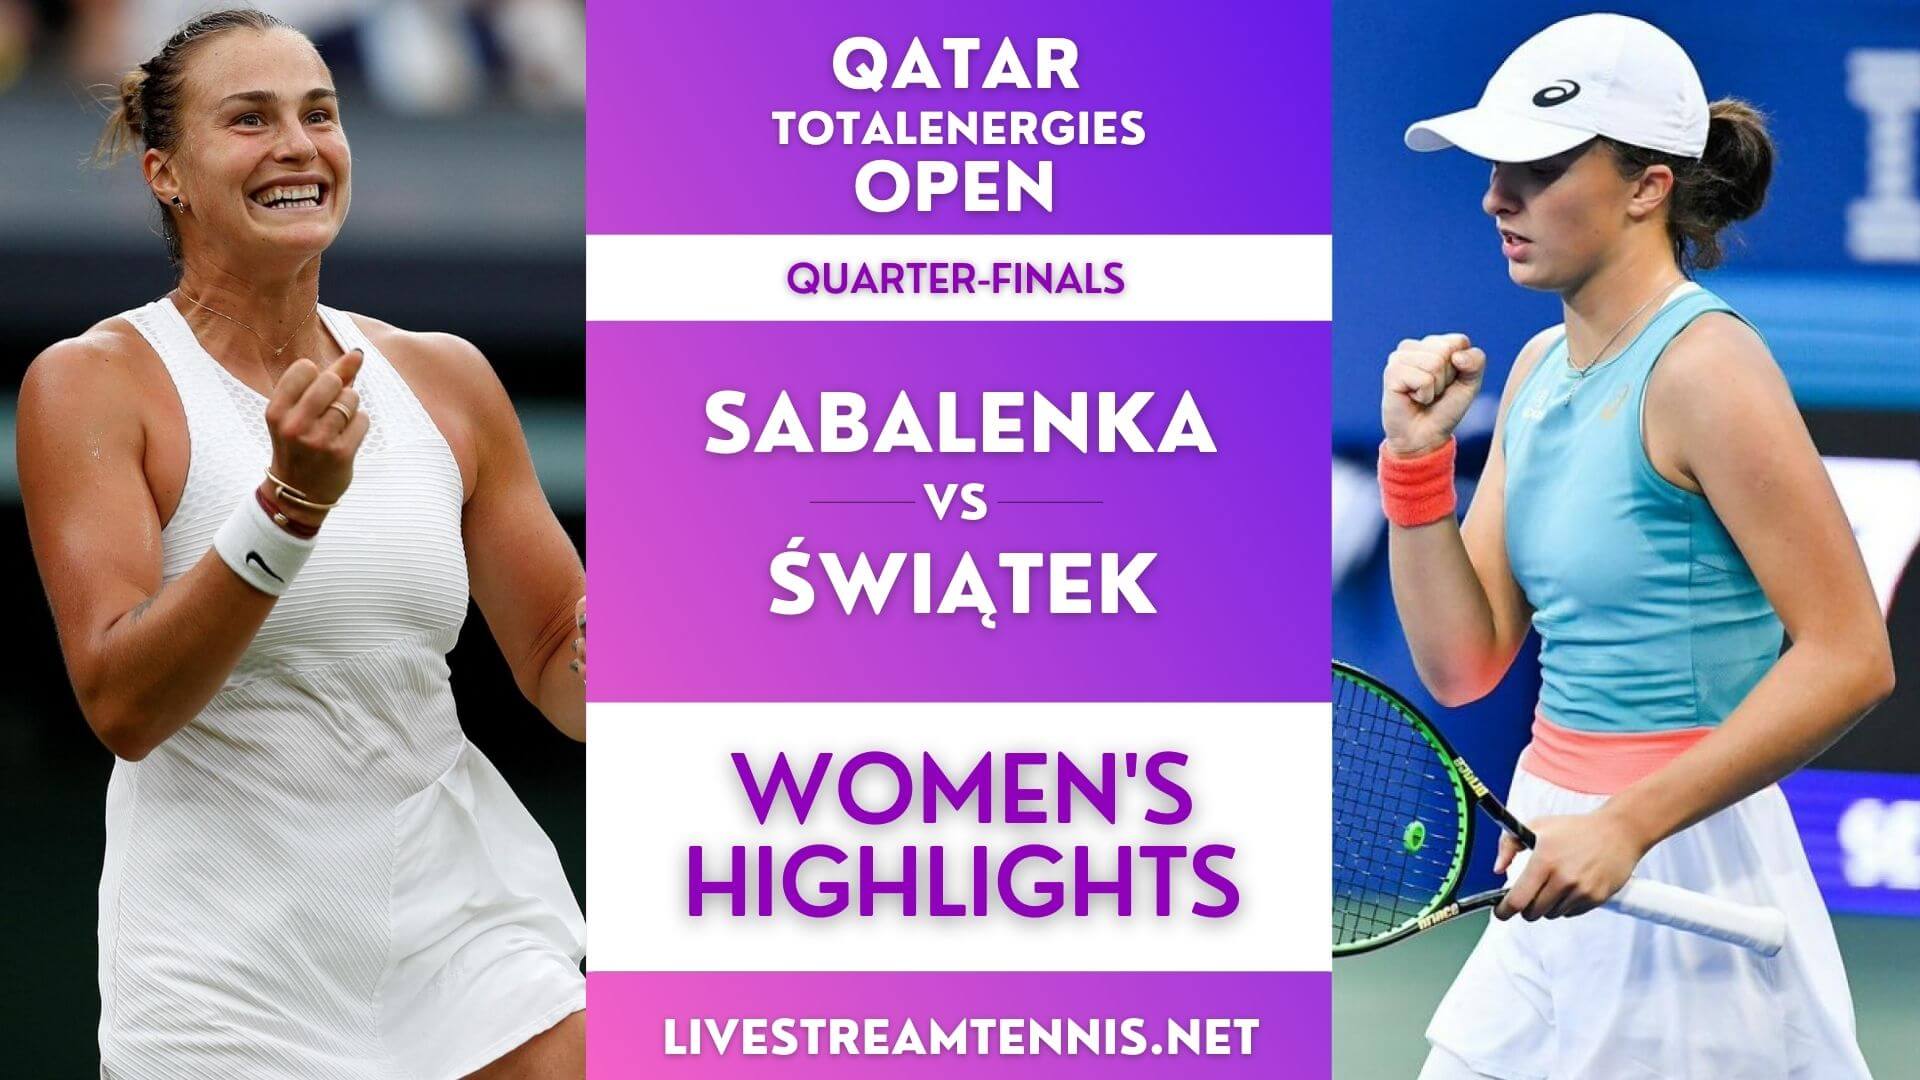 Qatar Open Ladies Quarter Final 1 Highlights 2022